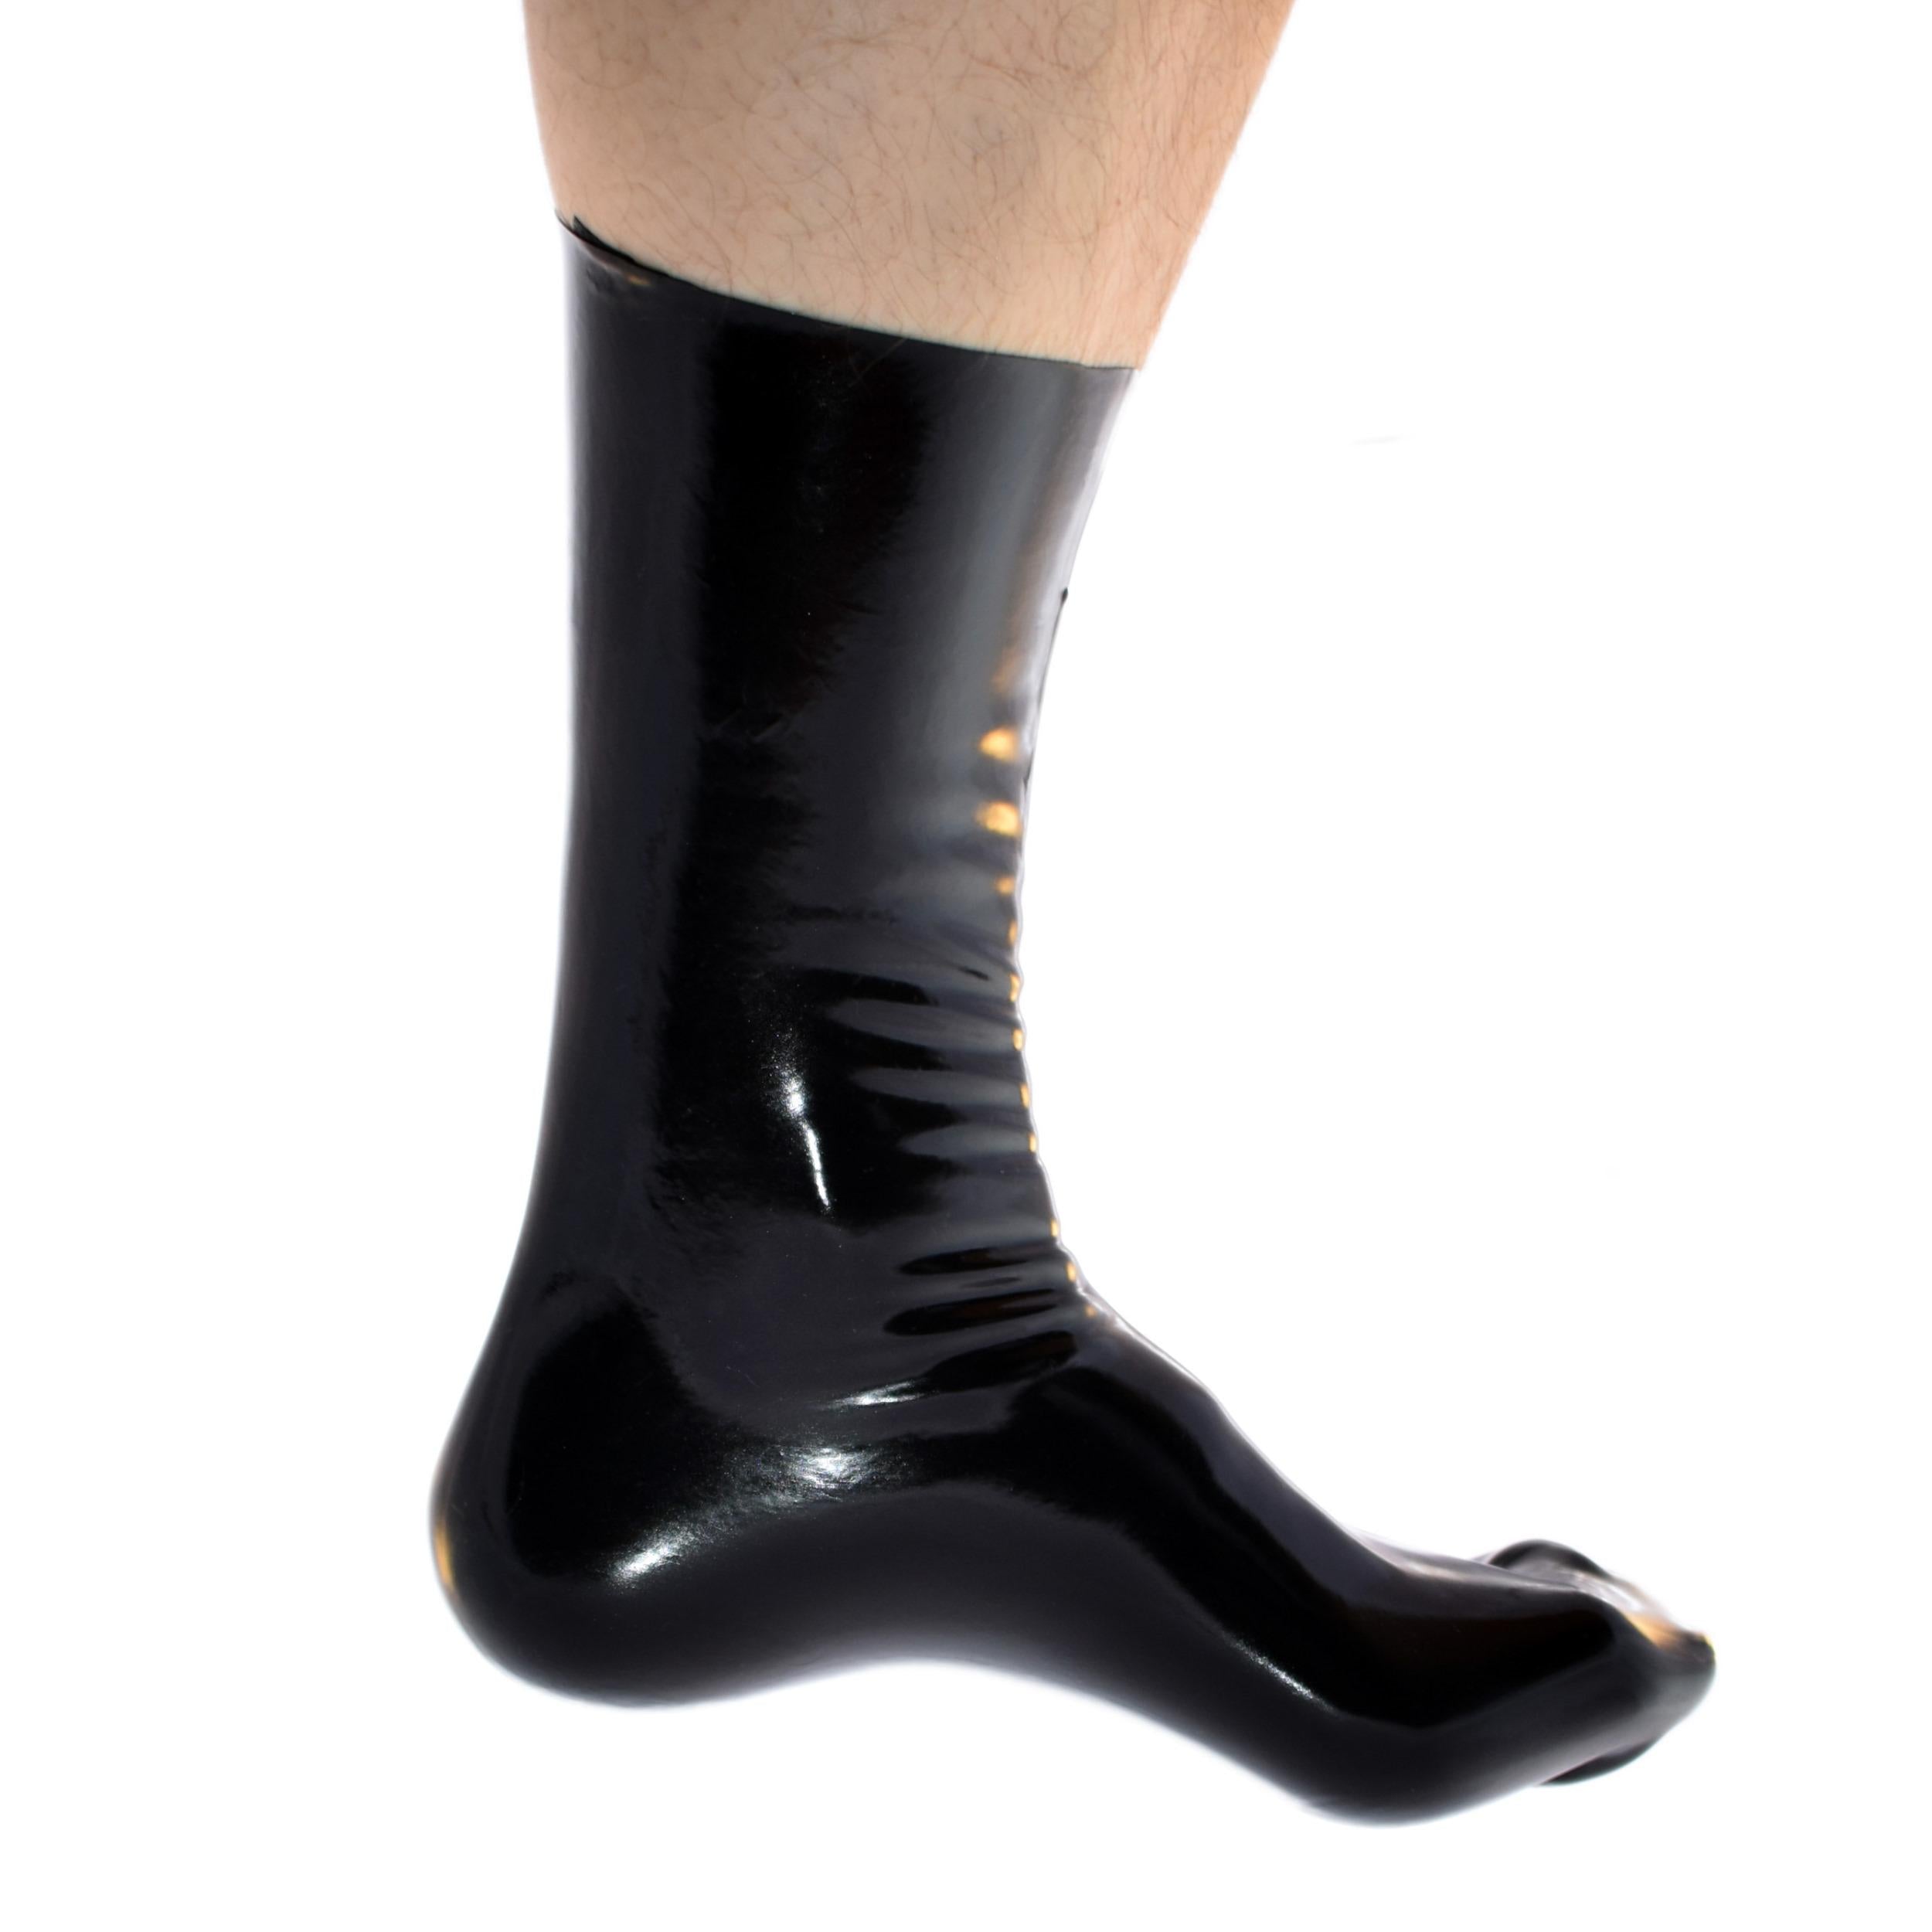 Rubberfashion Sexy Latex Socken kurz - extra dick - Rubber Latexsocken Knöchel lang - Latex Strümpfe für Damen und Herren